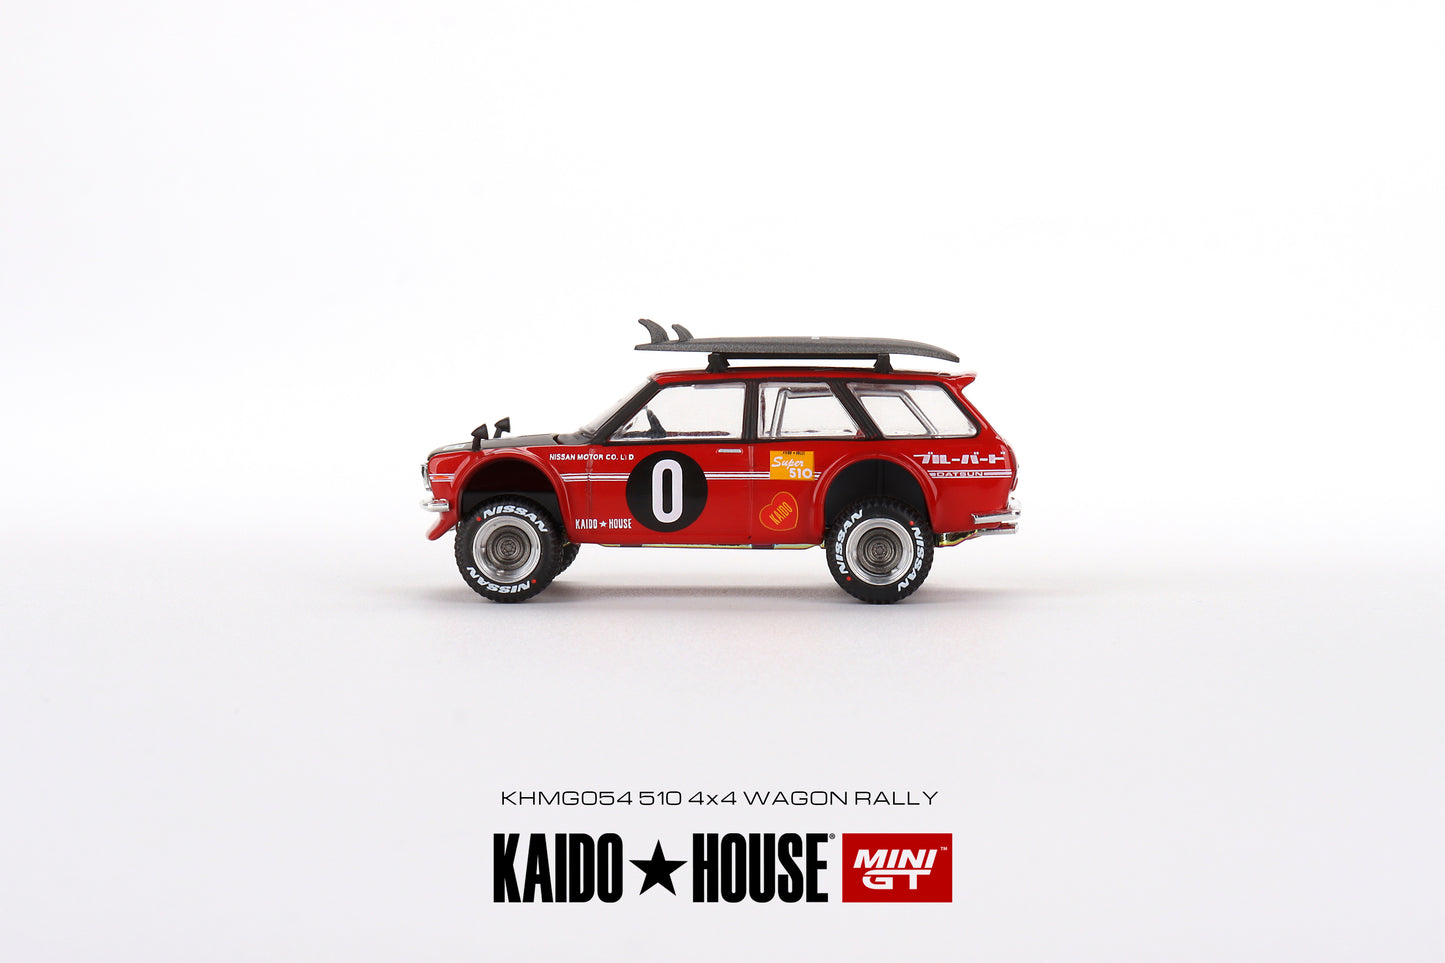 Mini GT Kaido House 054 Datsun 510 Wagon 4X4 Red with Surfboard 1:64